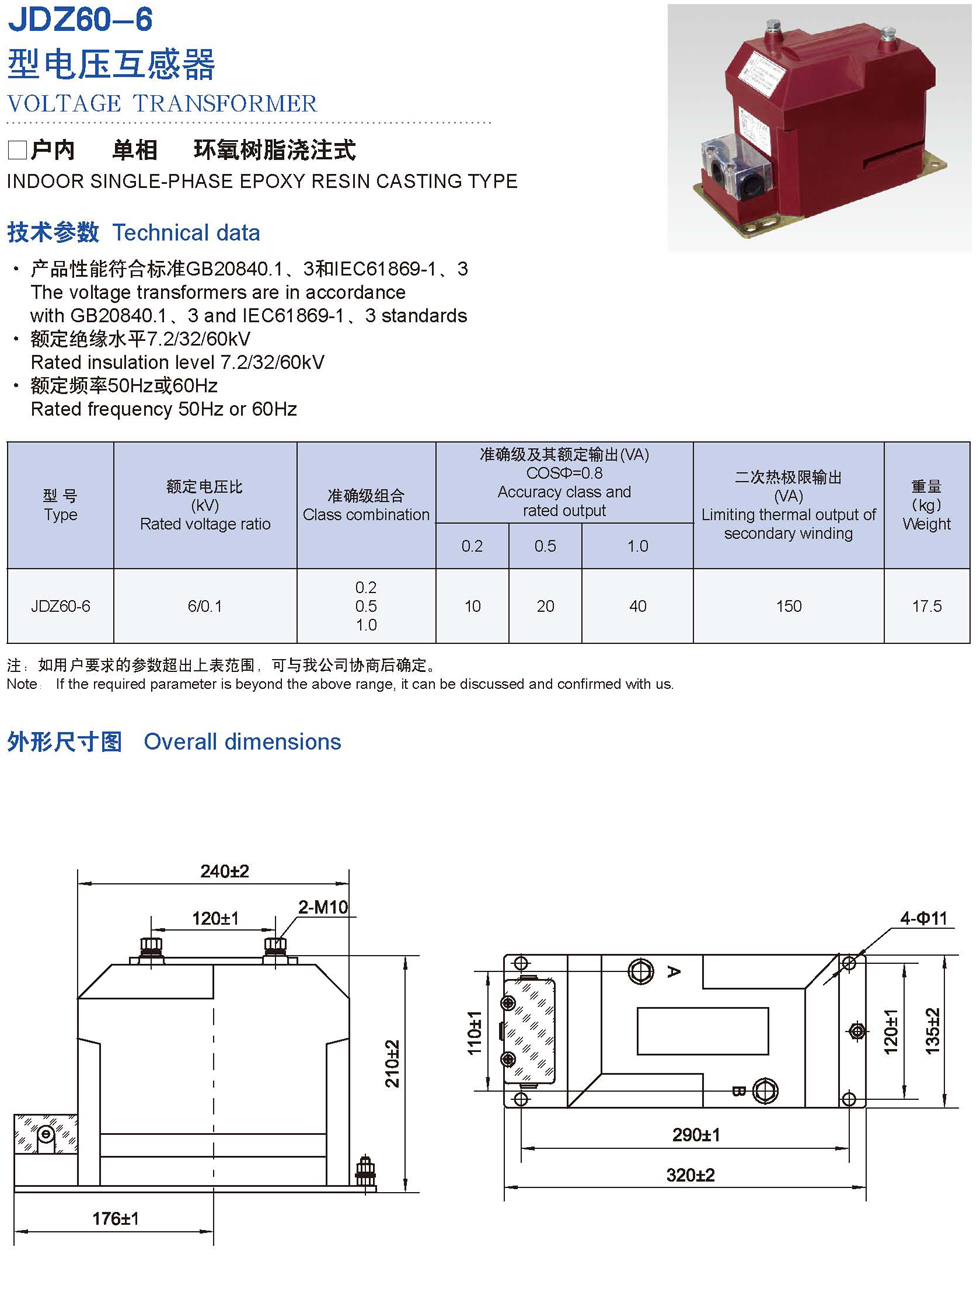 JDZ60-6 Transformer Products